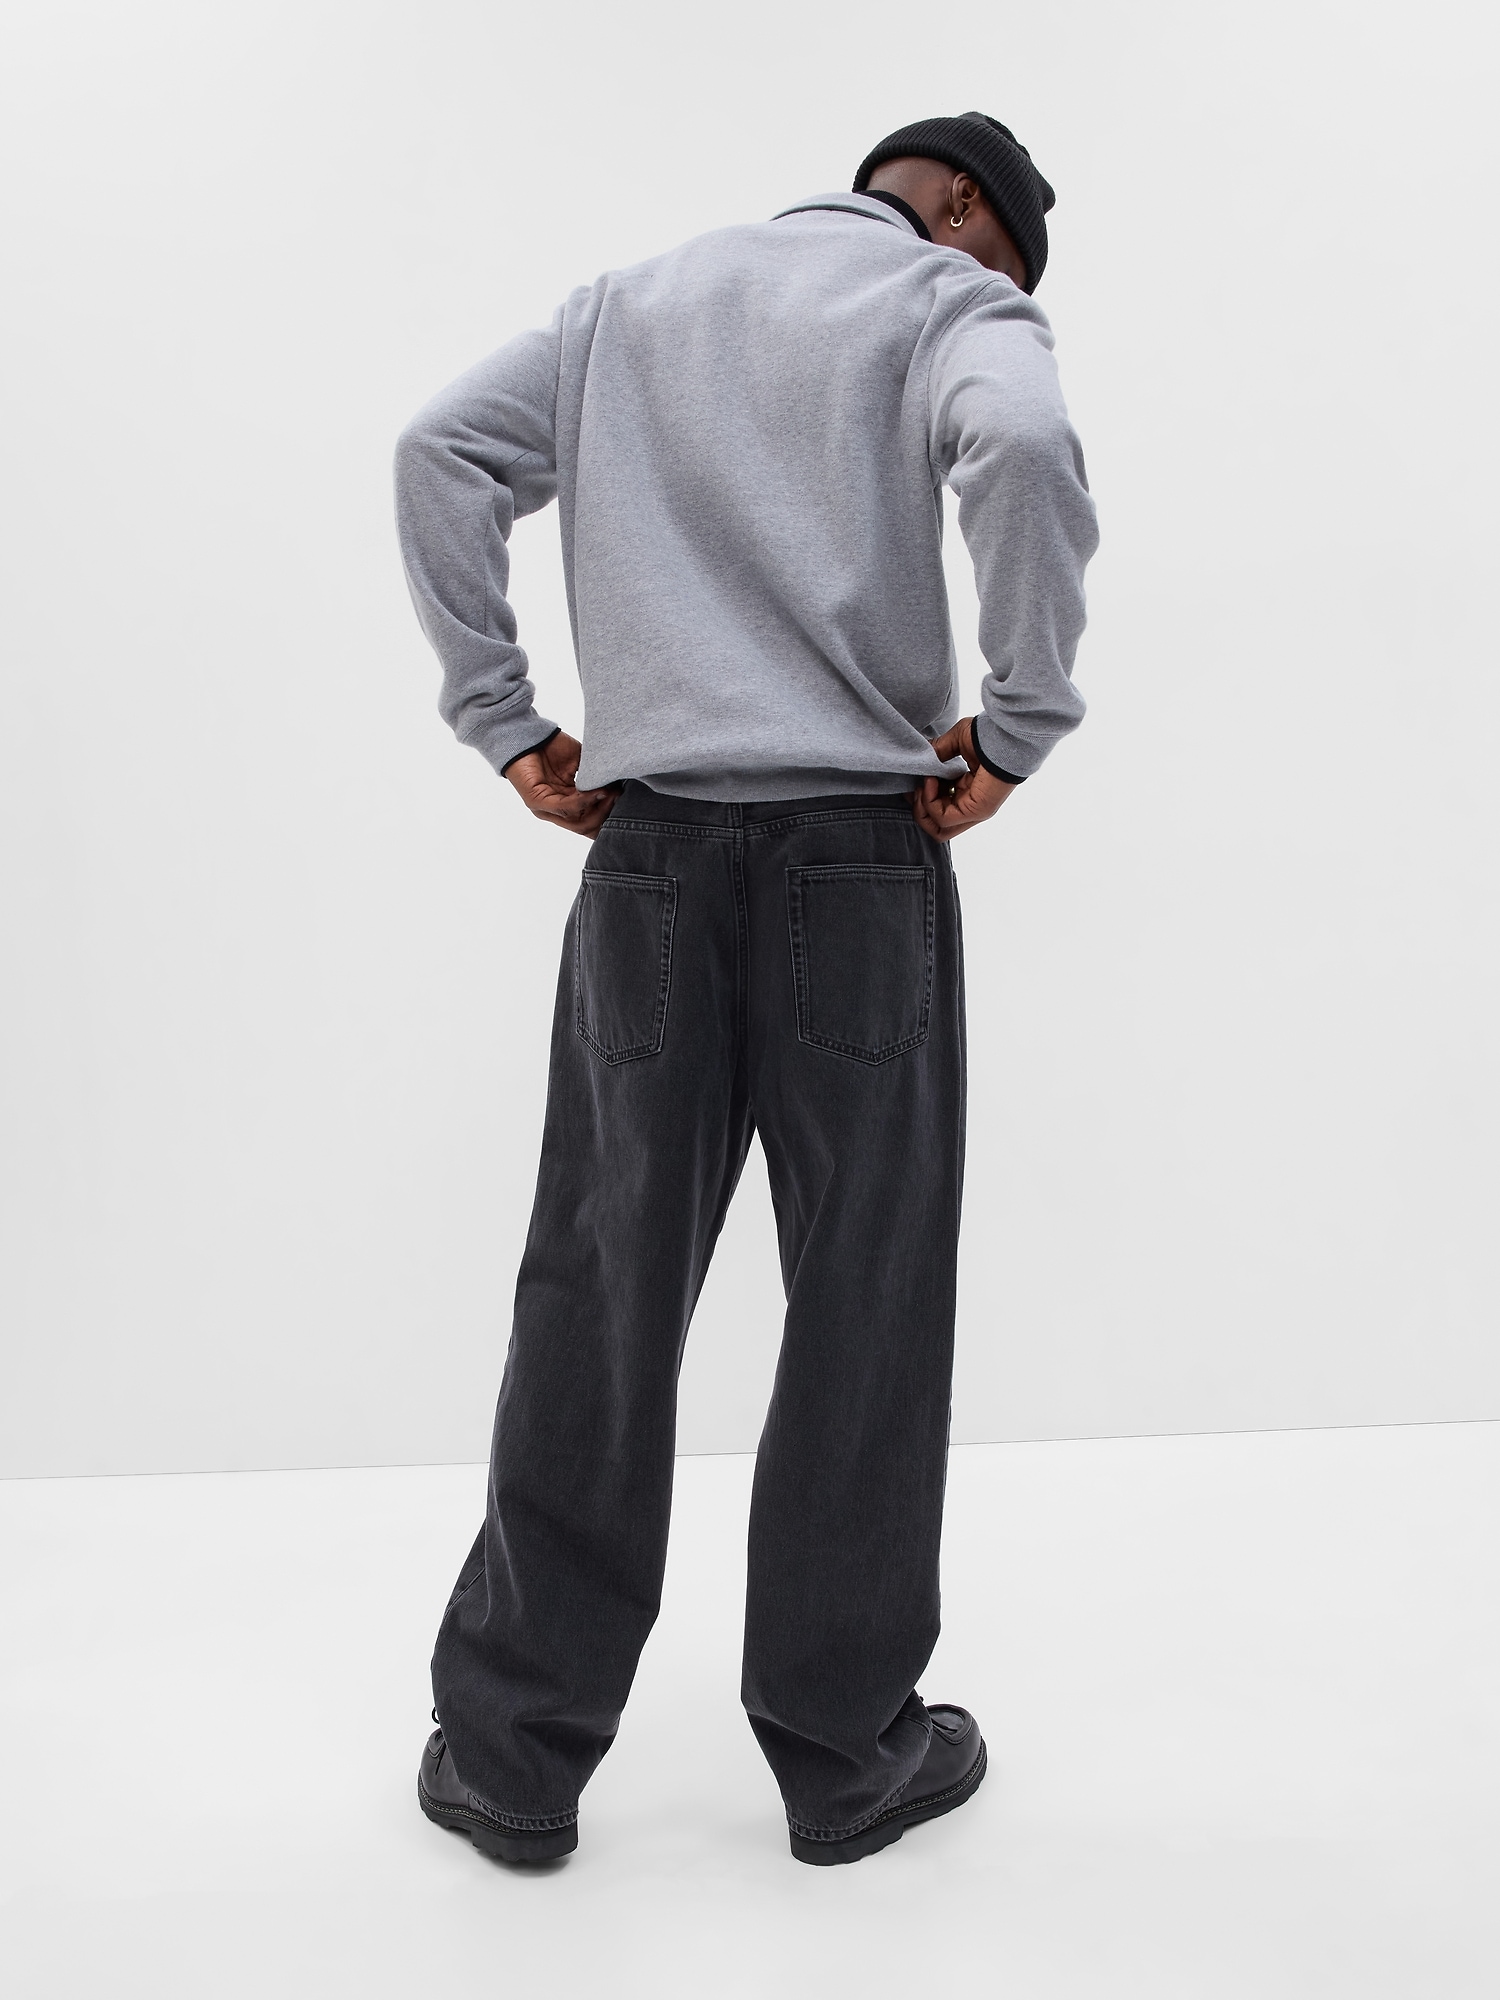 Buy Men's Black Baggy Fit Jeans Online